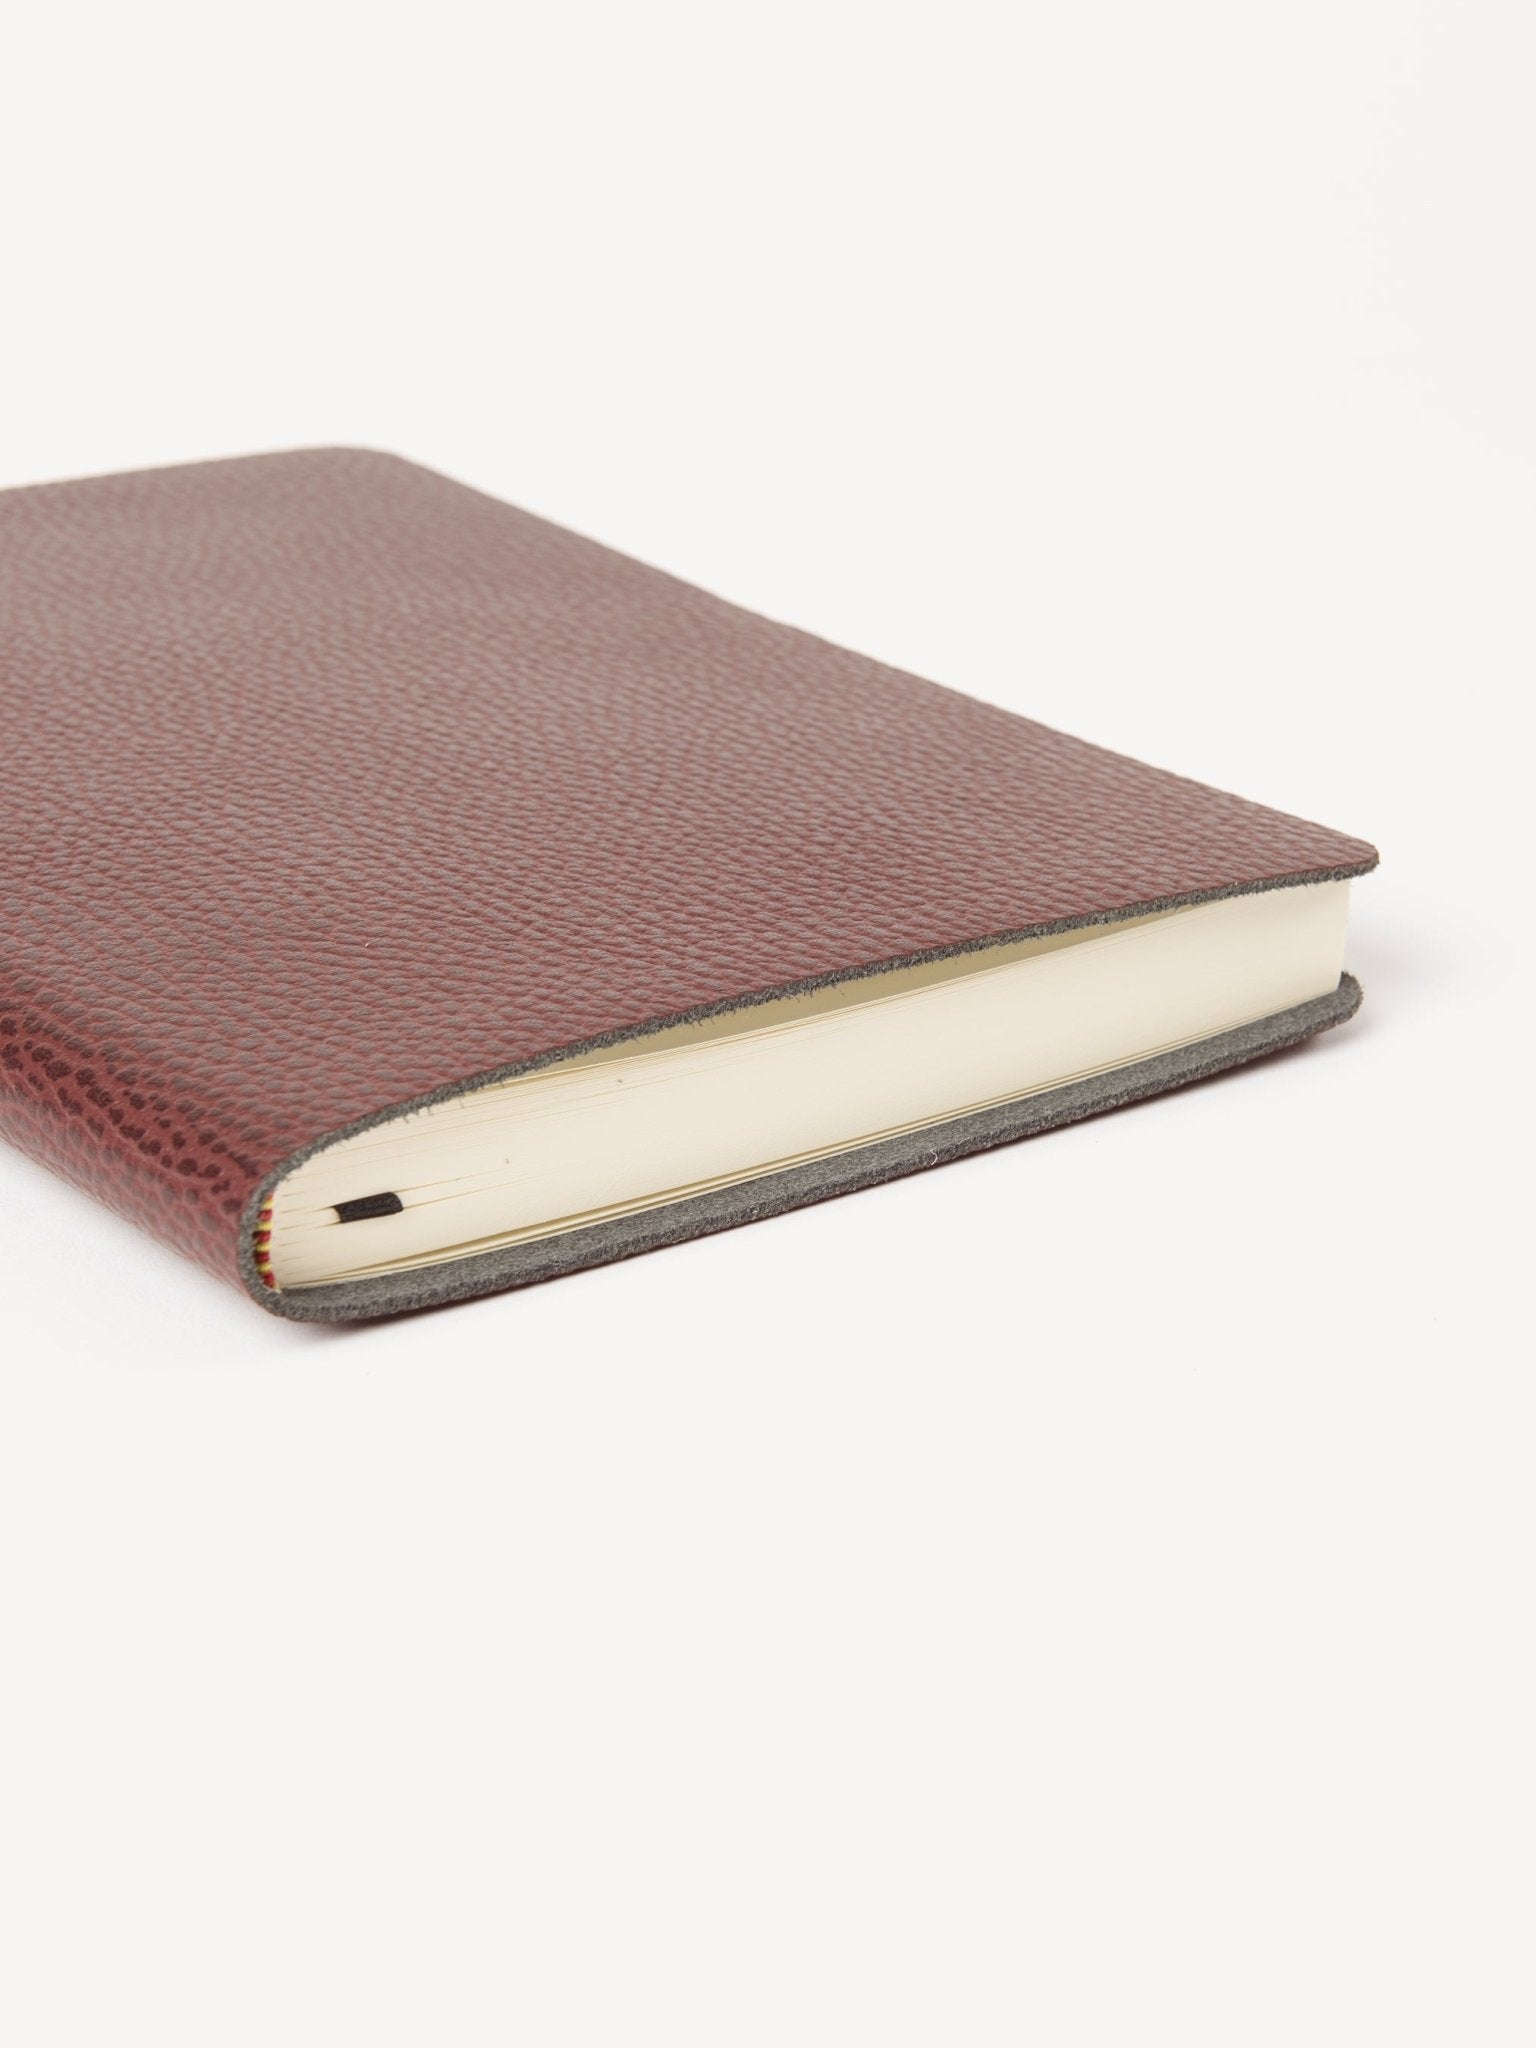 The A5 Notebook - Oxblood Celtic Grain - The Cambridge Satchel Company US Store